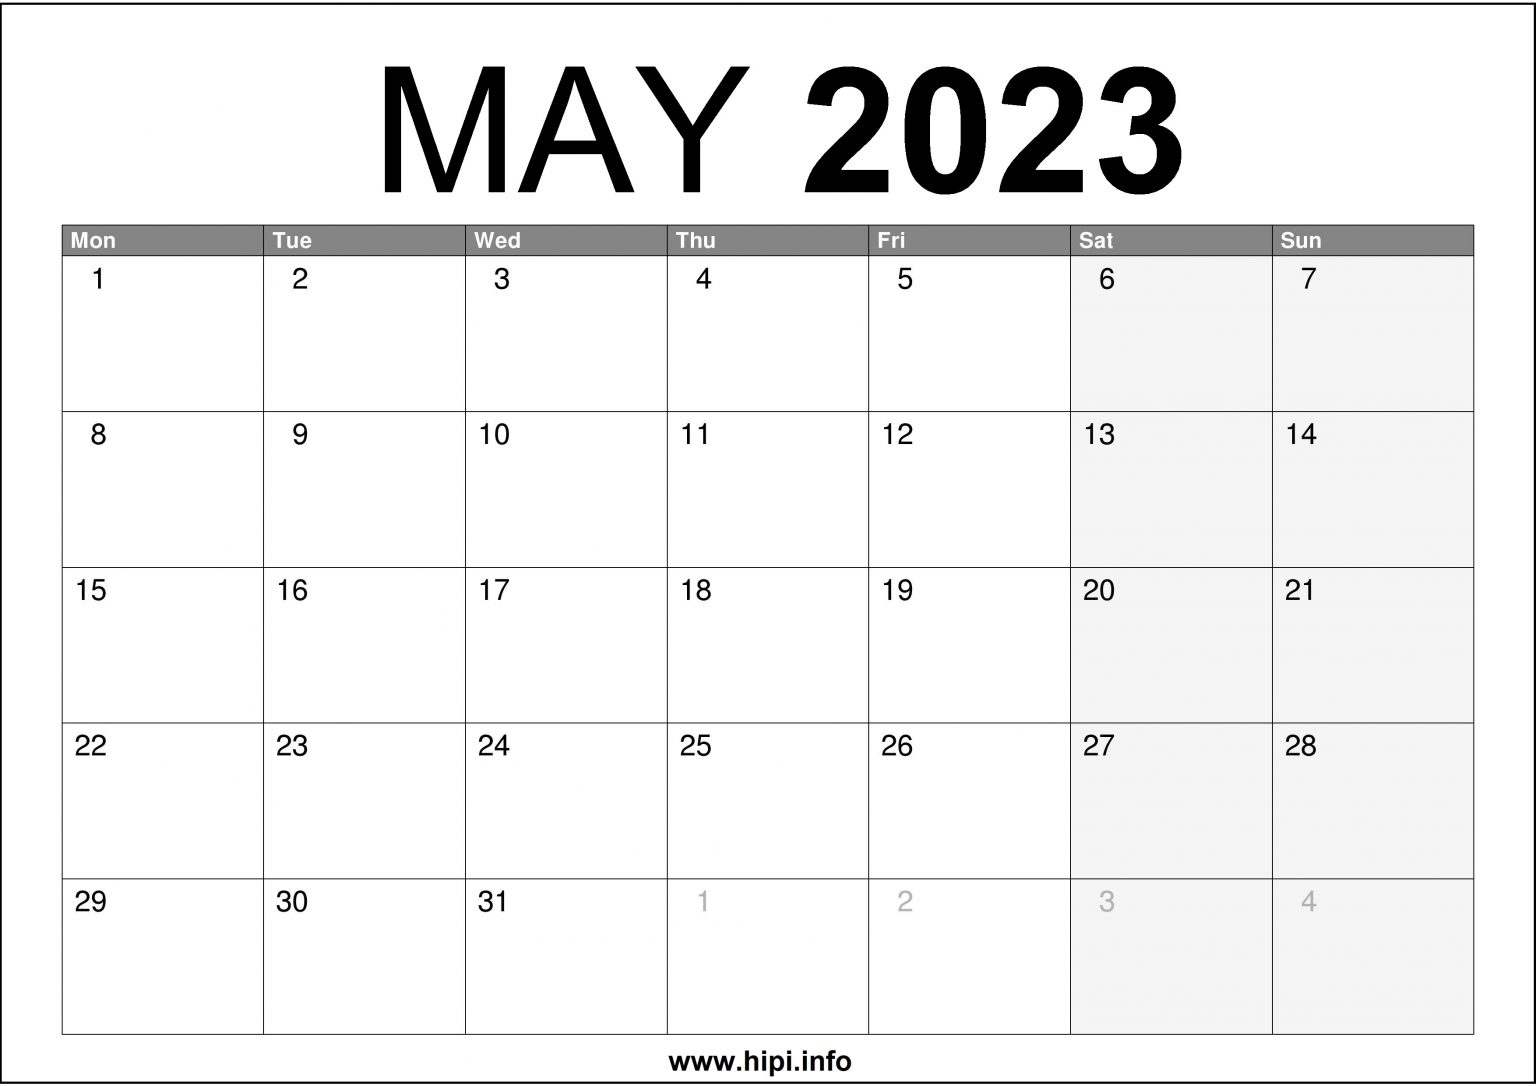 may-2023-uk-free-printable-calendar-hipi-info